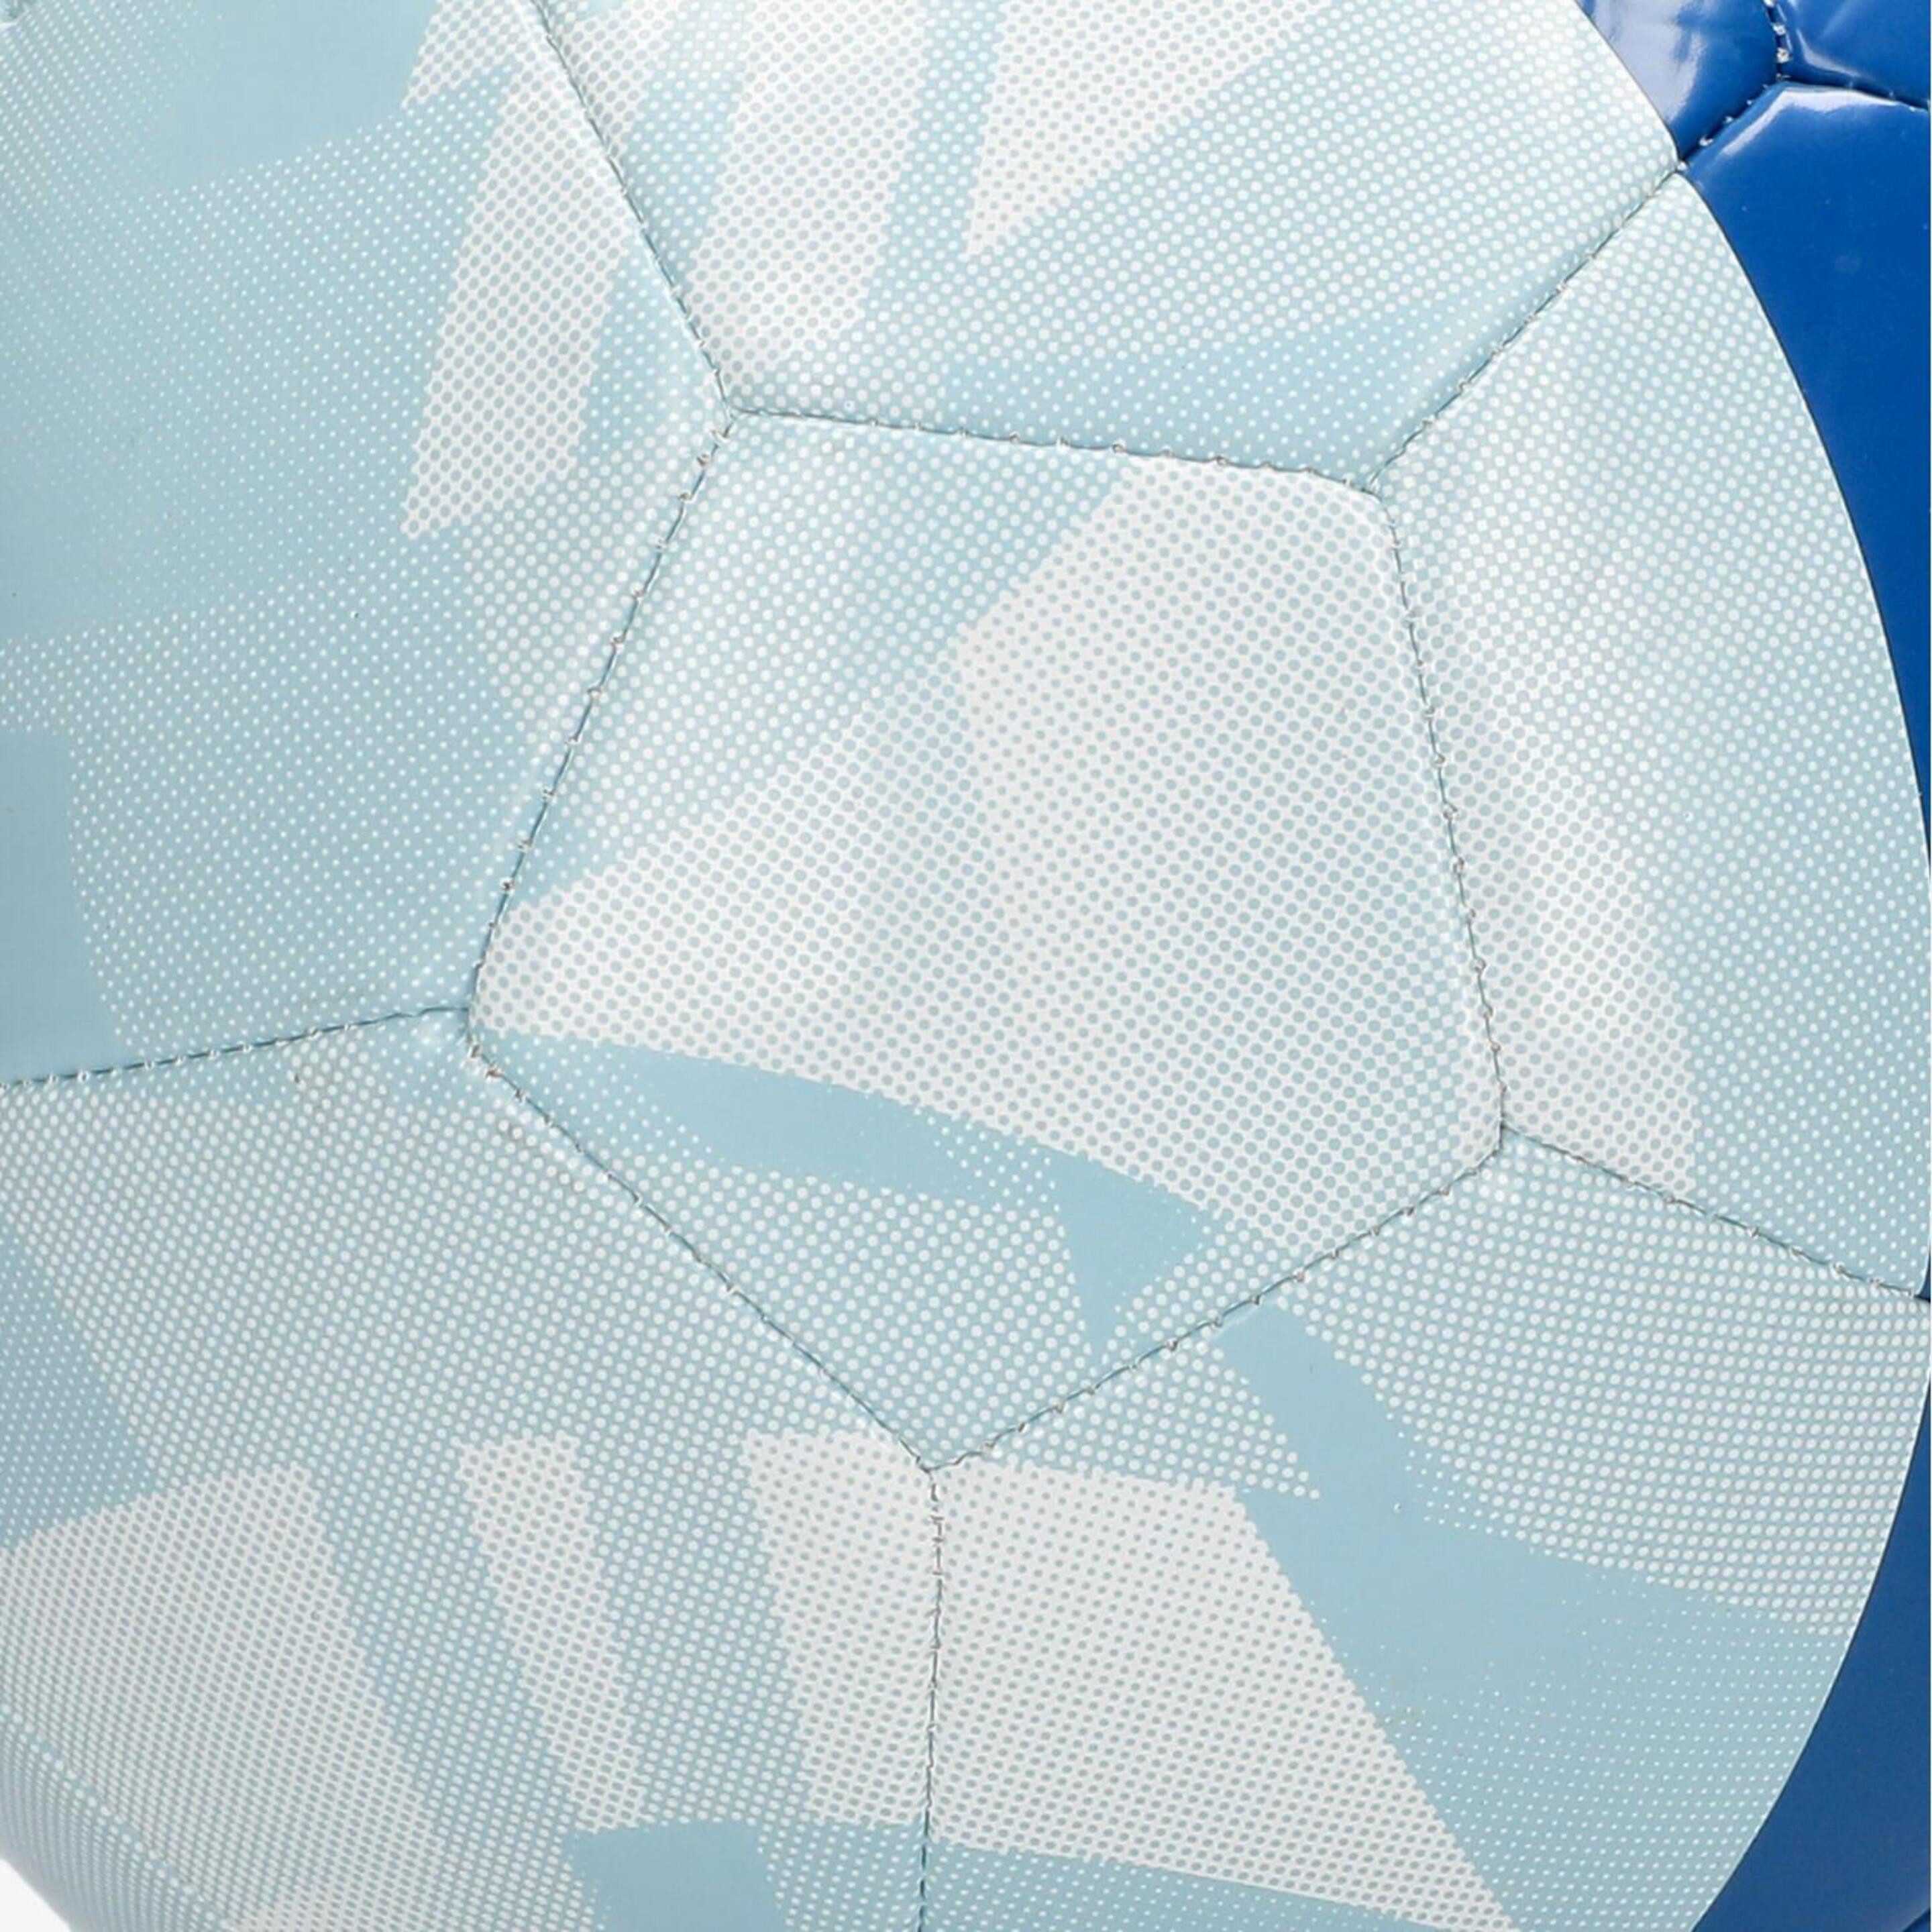 Bola Manchester City 23/24 - Azul - Bola Futebol | Sport Zone